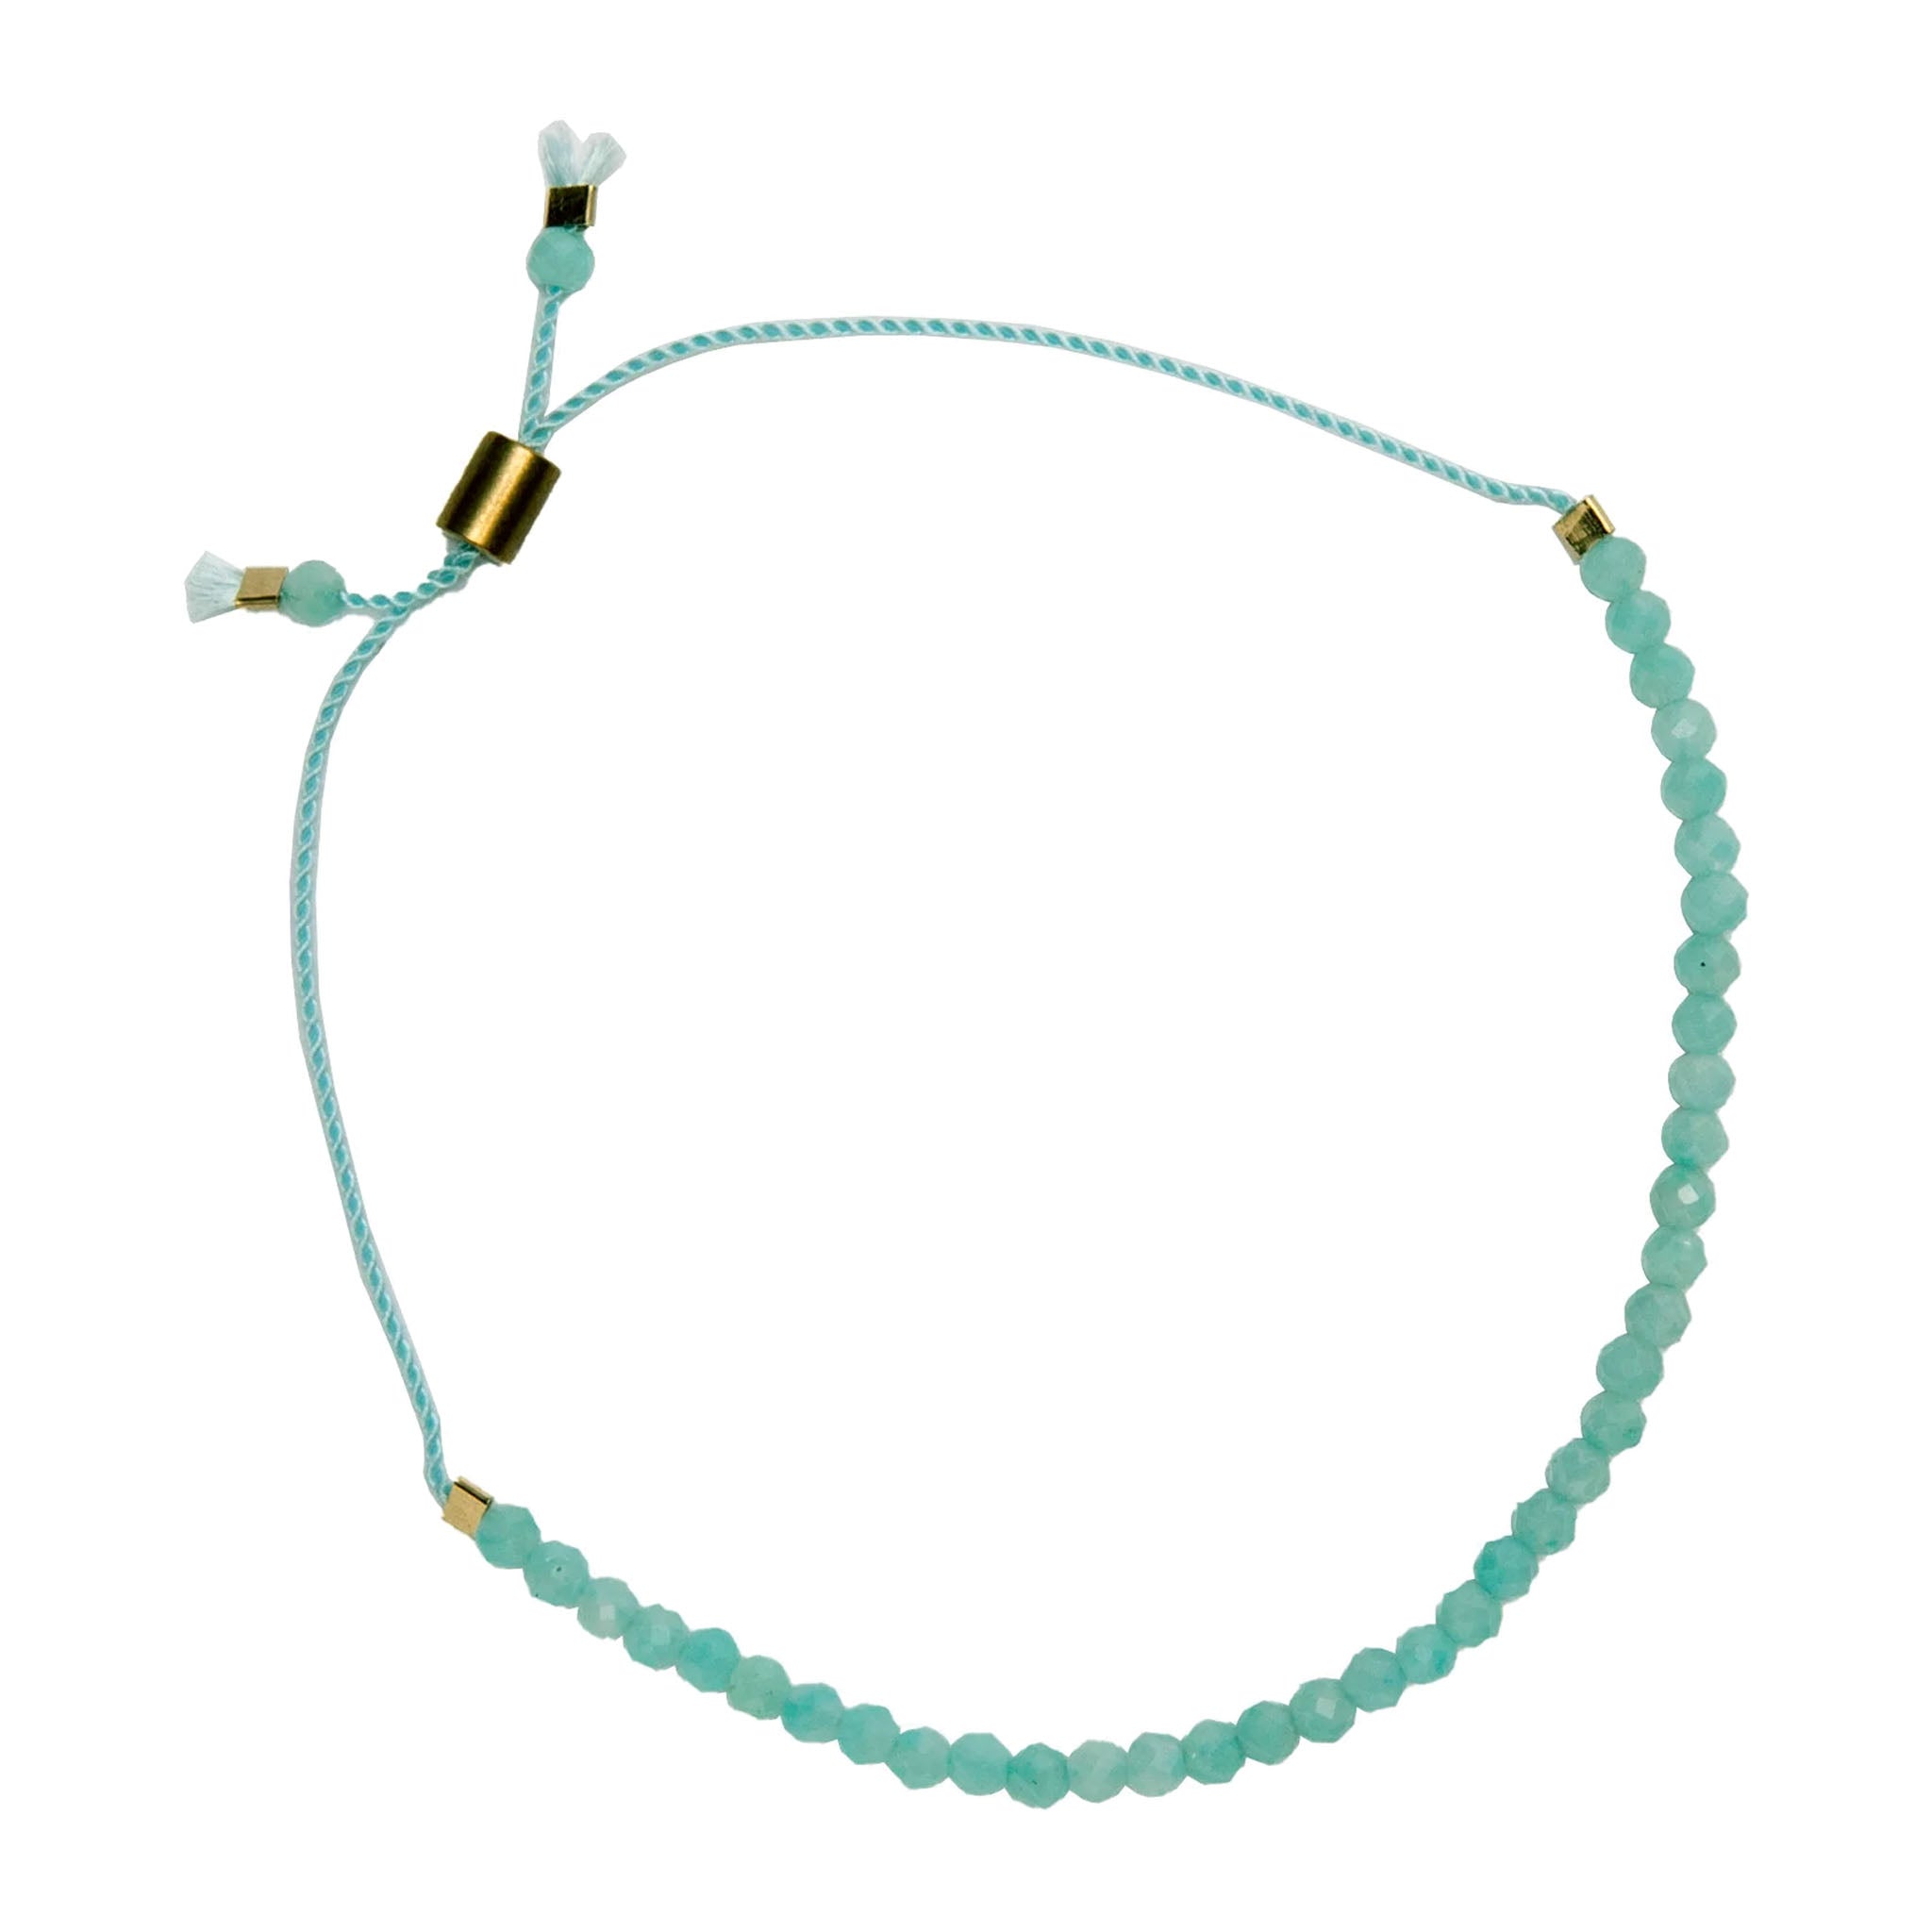 Calming & Anti-Anxiety Gemstone Bracelet